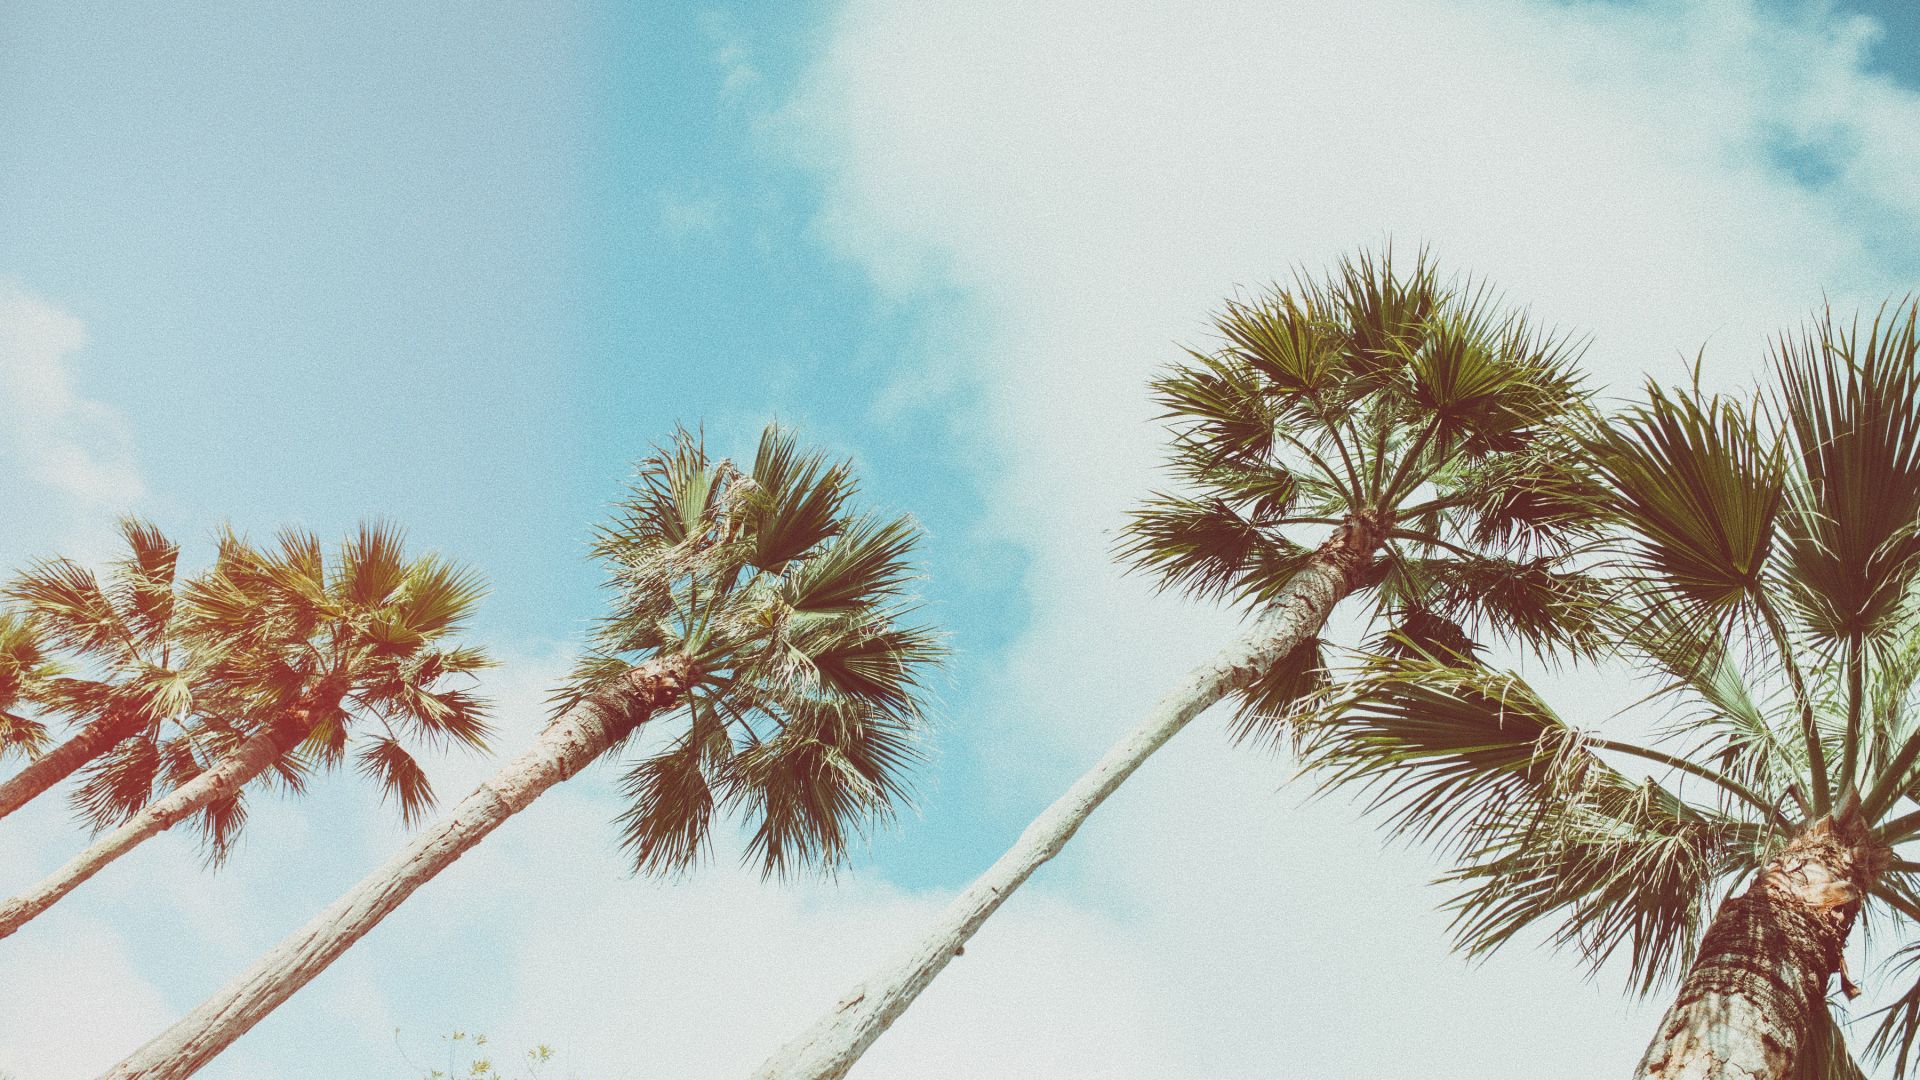 A Palm Tree